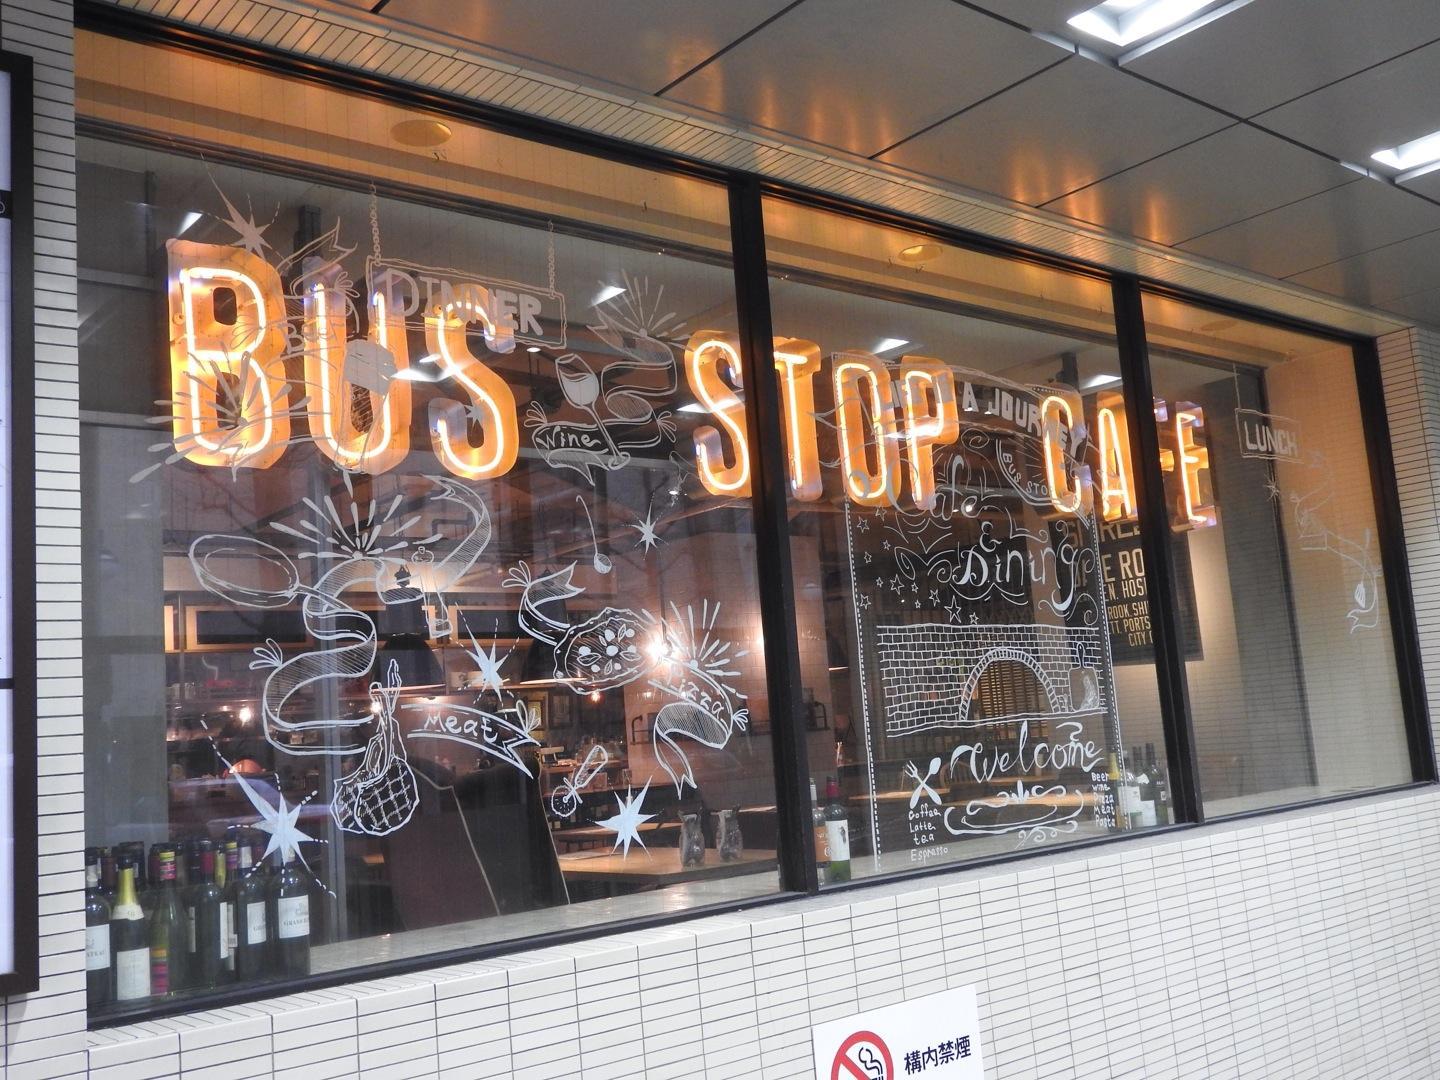 Bus Stop Cafe周辺の観光スポット情報 ホテル 旅館の宿泊予約なら Navitime Travel